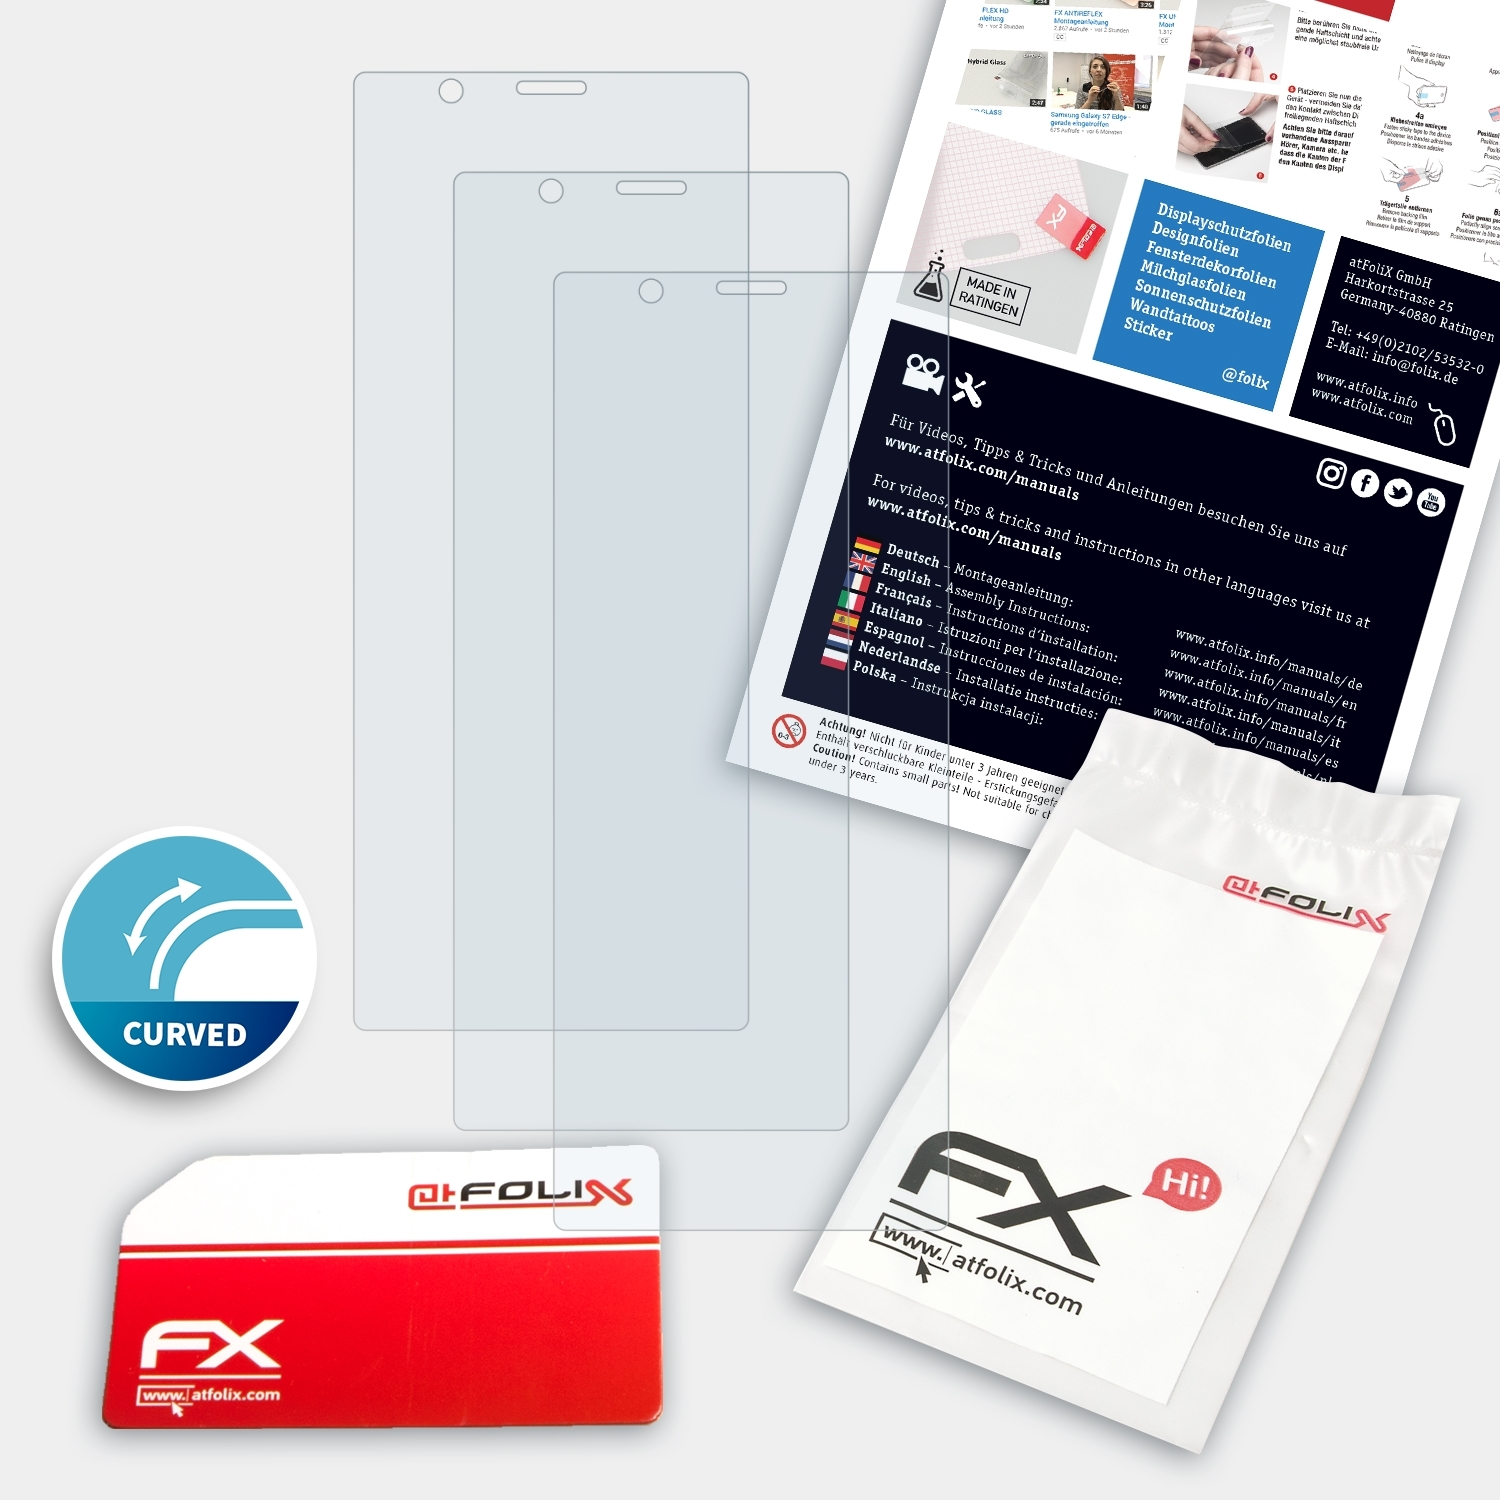 Sony Displayschutz(für 5) ATFOLIX FX-ActiFleX Xperia 3x